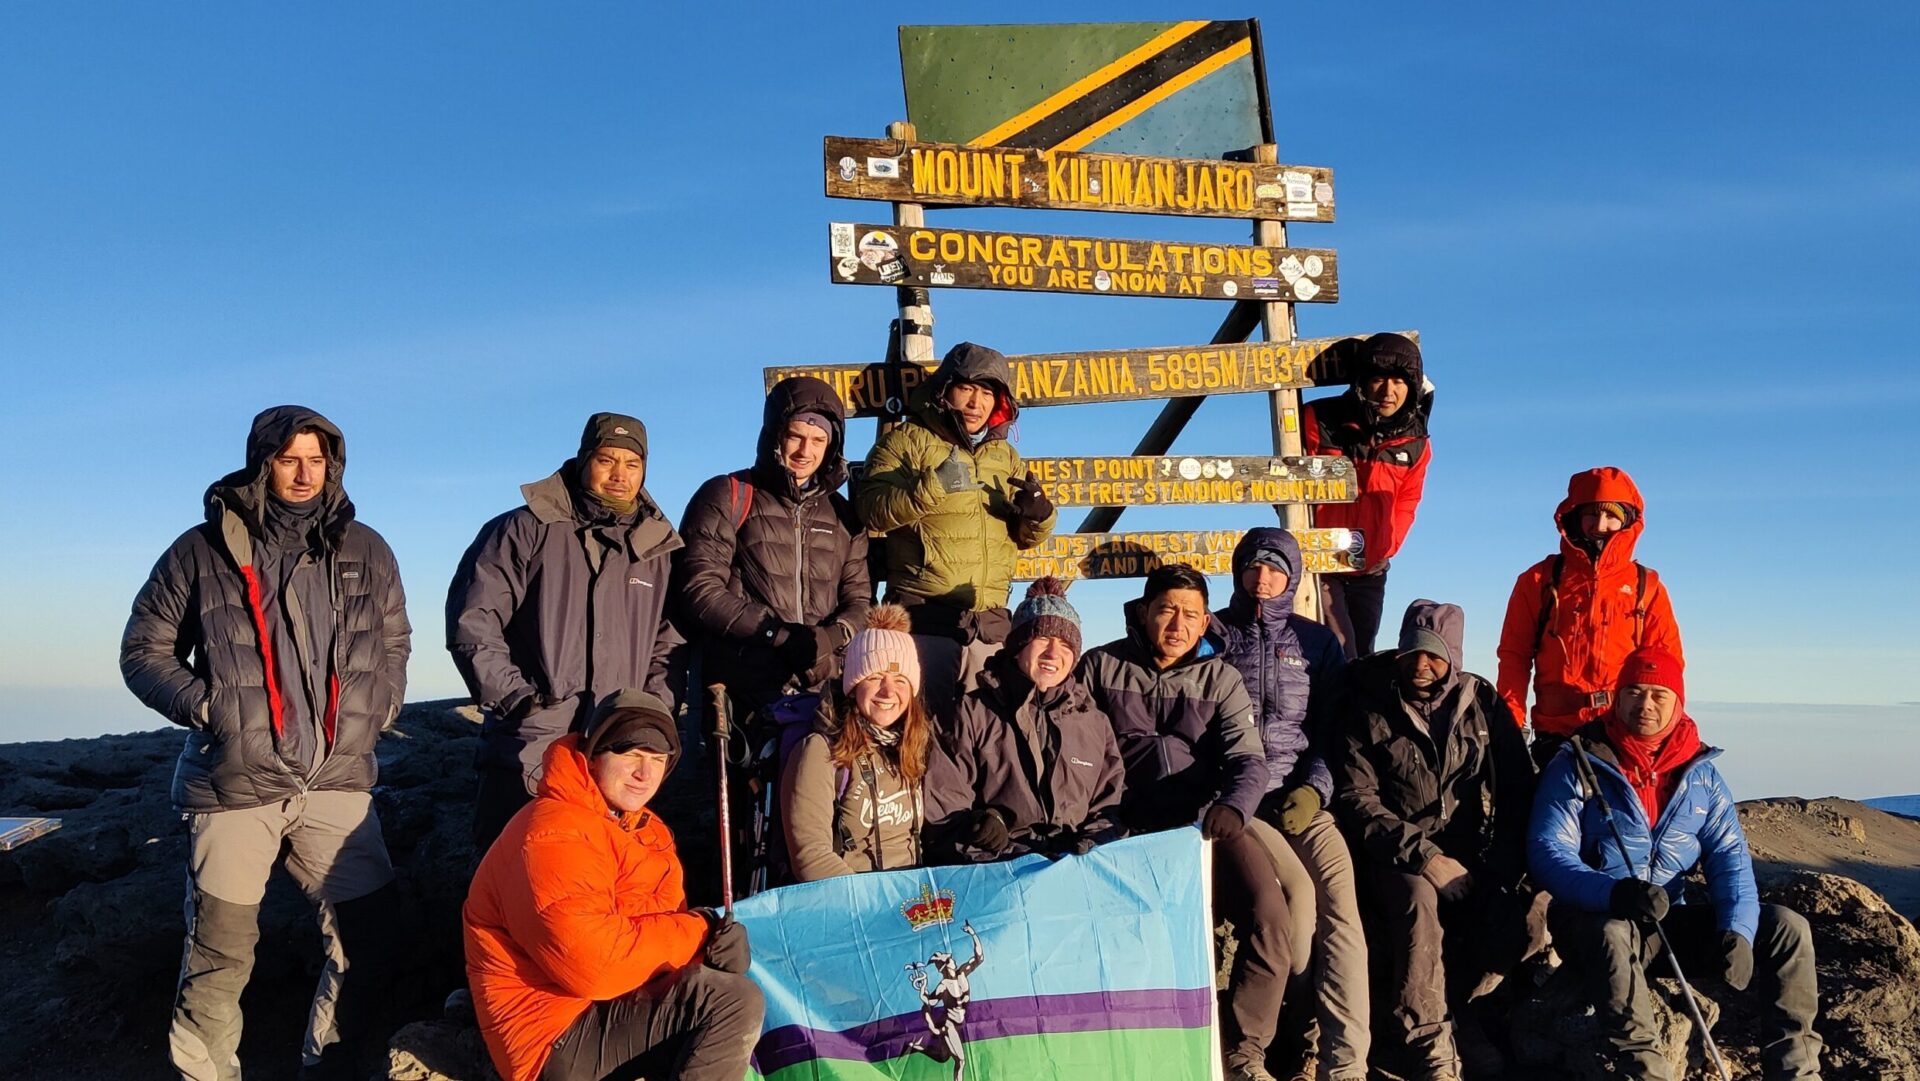 Summiting the highest mountain in Africa, Kilimanjaro